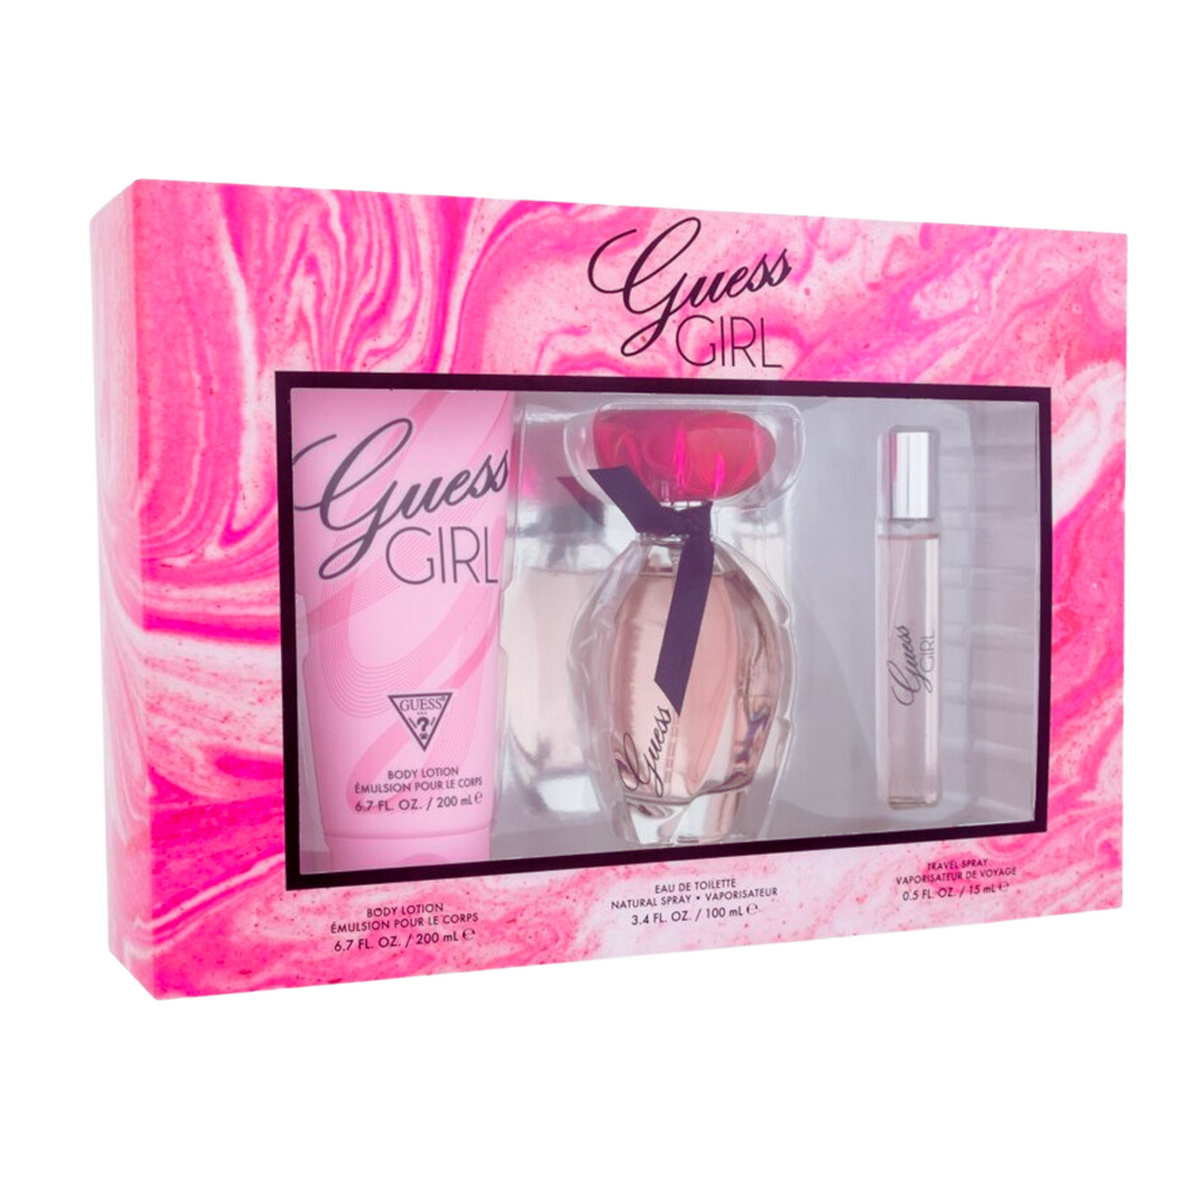 Guess Pink Eau De Parfum Women Set